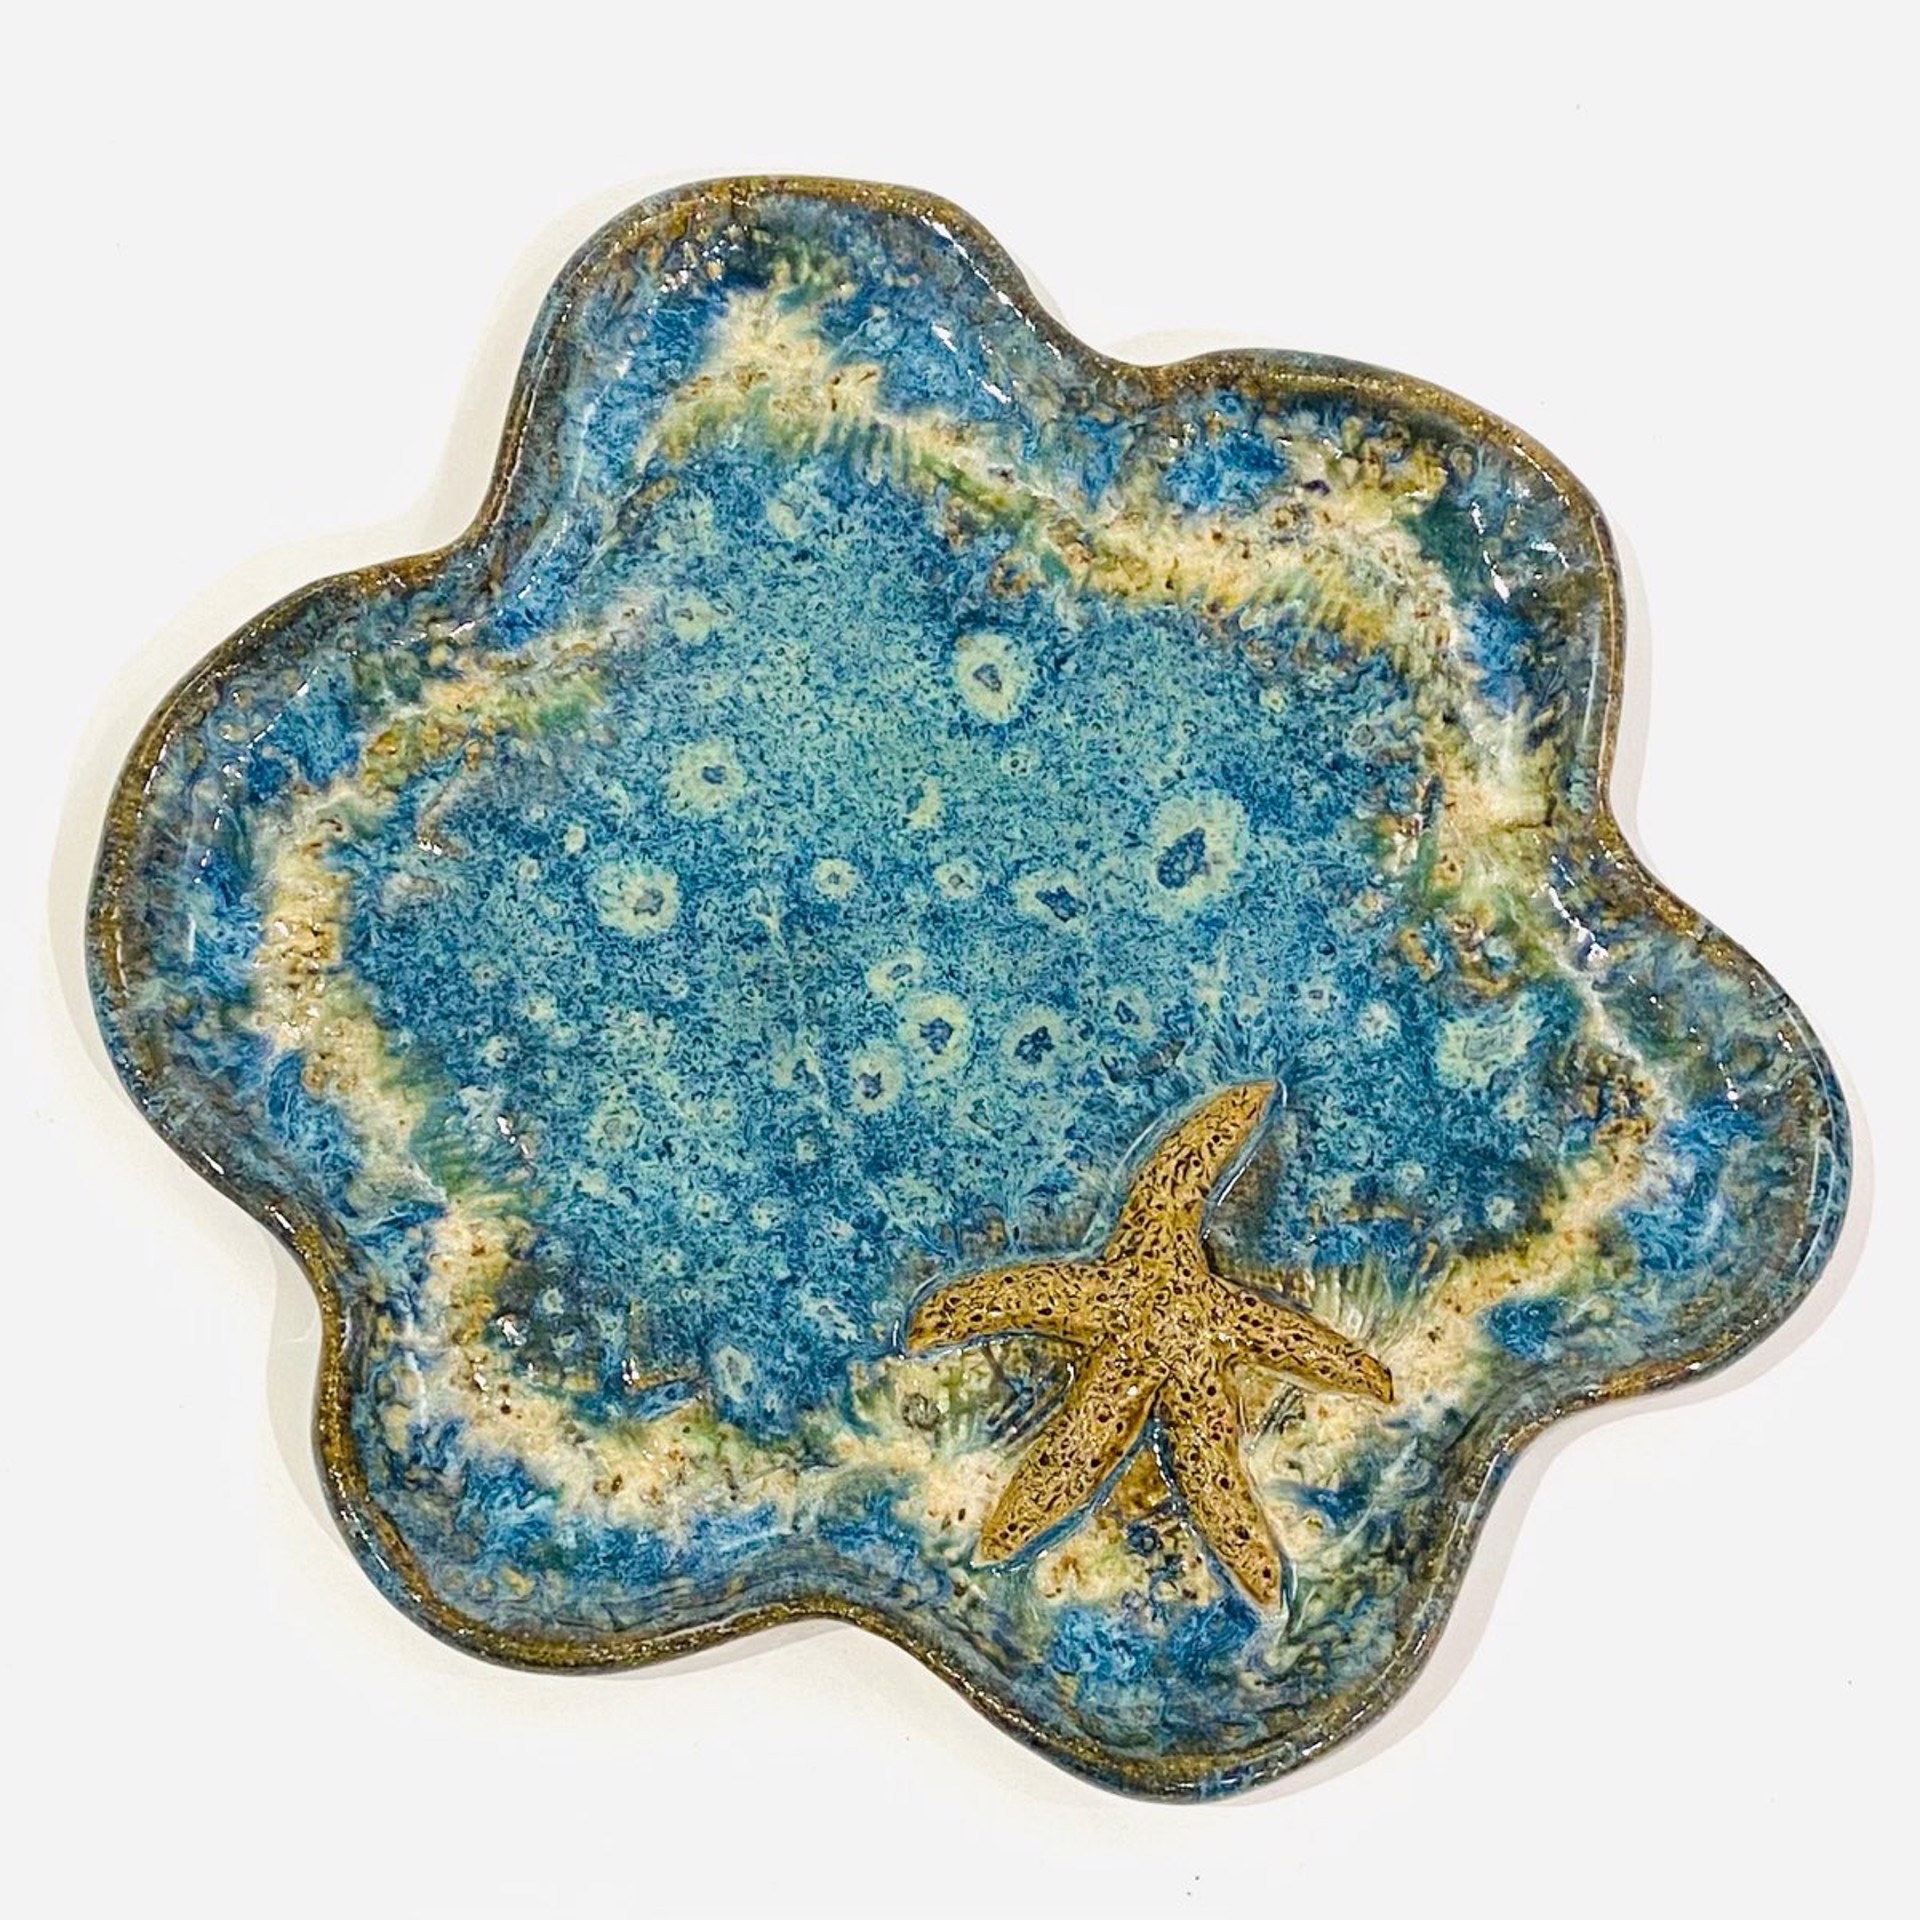 LG22-915 Small Plate with Starfish (Blue Glaze) by Jim & Steffi Logan